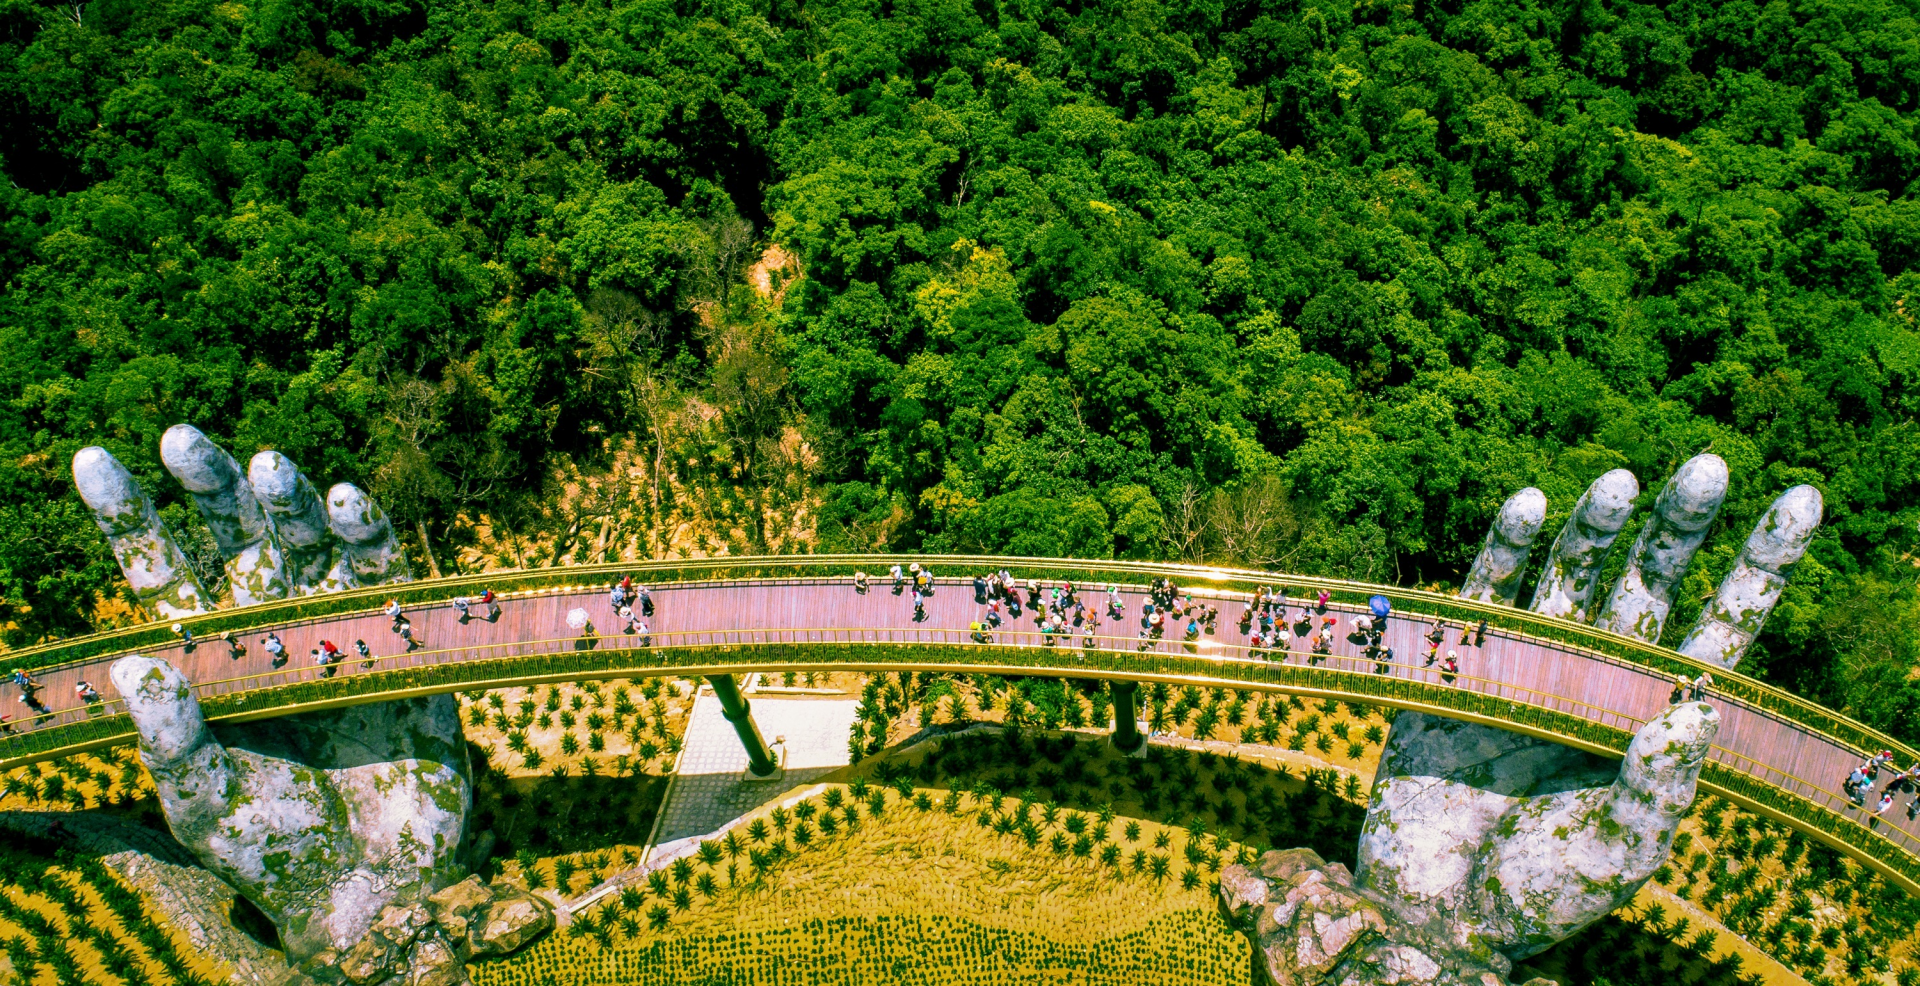 The Golden Bridge - one of the most famous tourist destinations in Vietnam